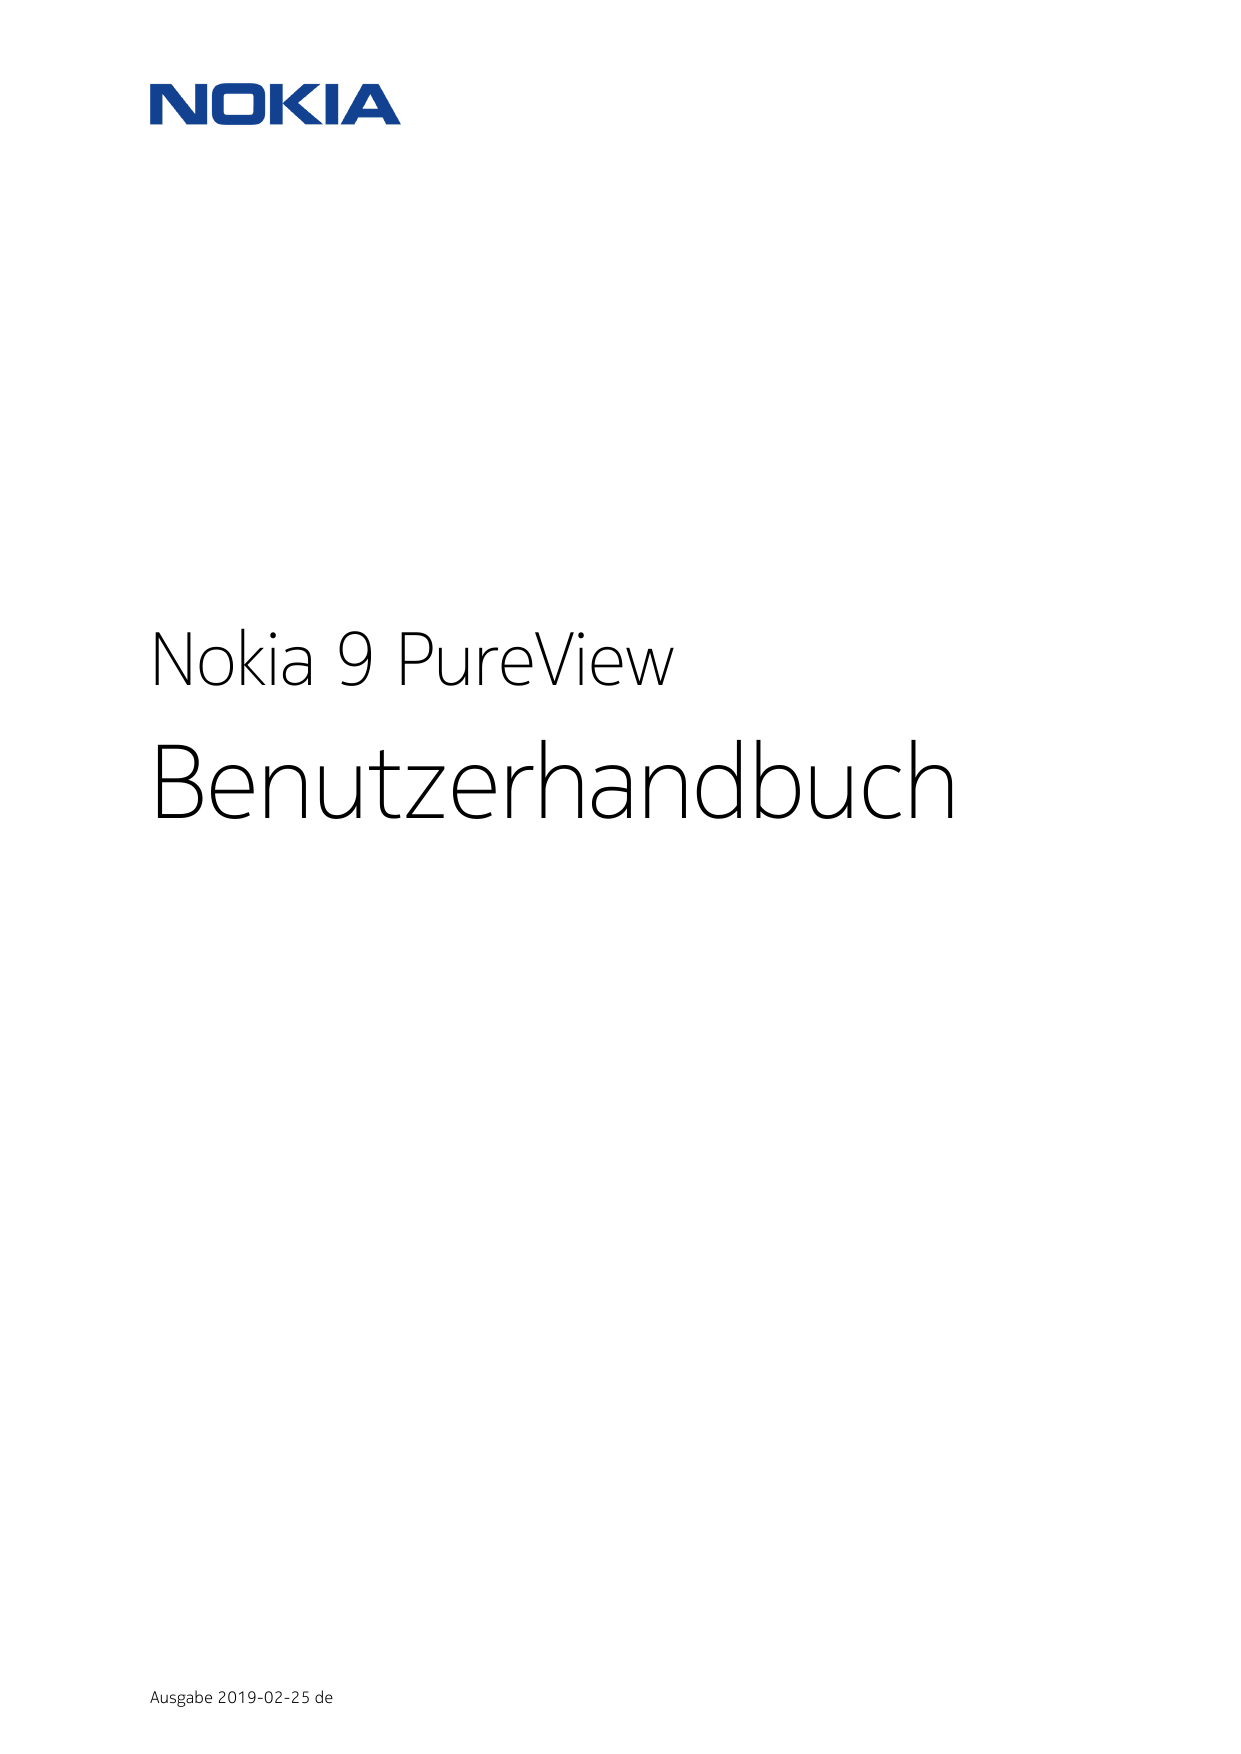 Nokia 9 PureViewBenutzerhandbuchAusgabe 2019-02-25 de